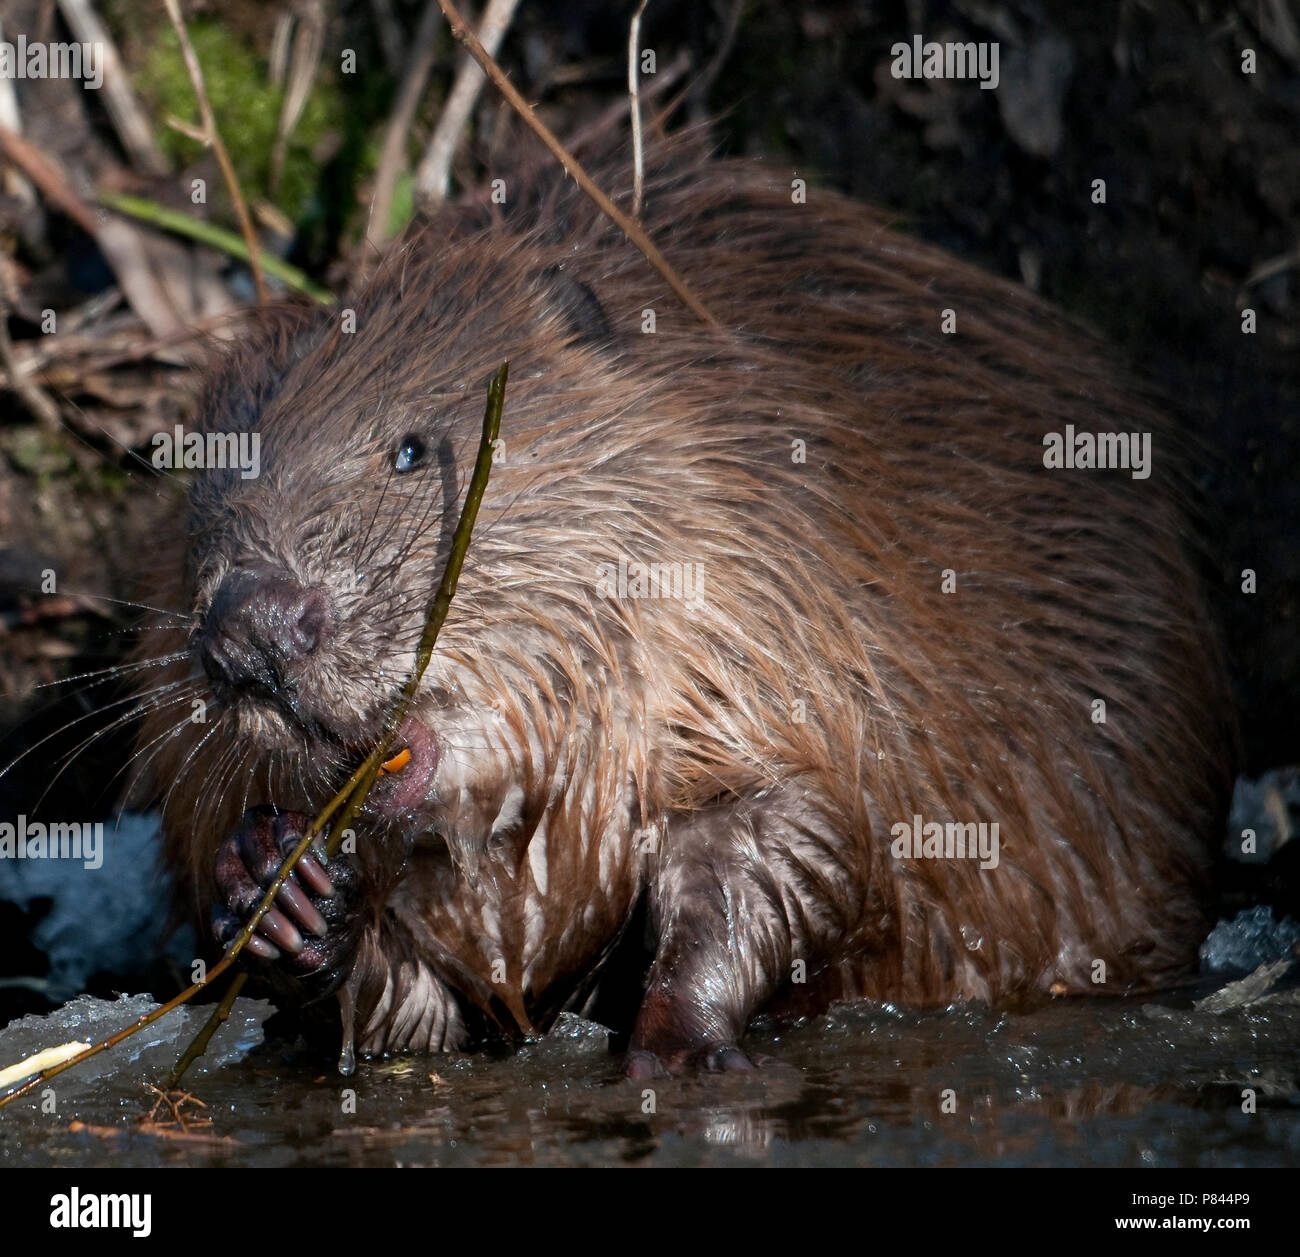 Wilde bever in Gronings natuurgebied; Wild Beaver in Dutch Nature reserve Stock Photo